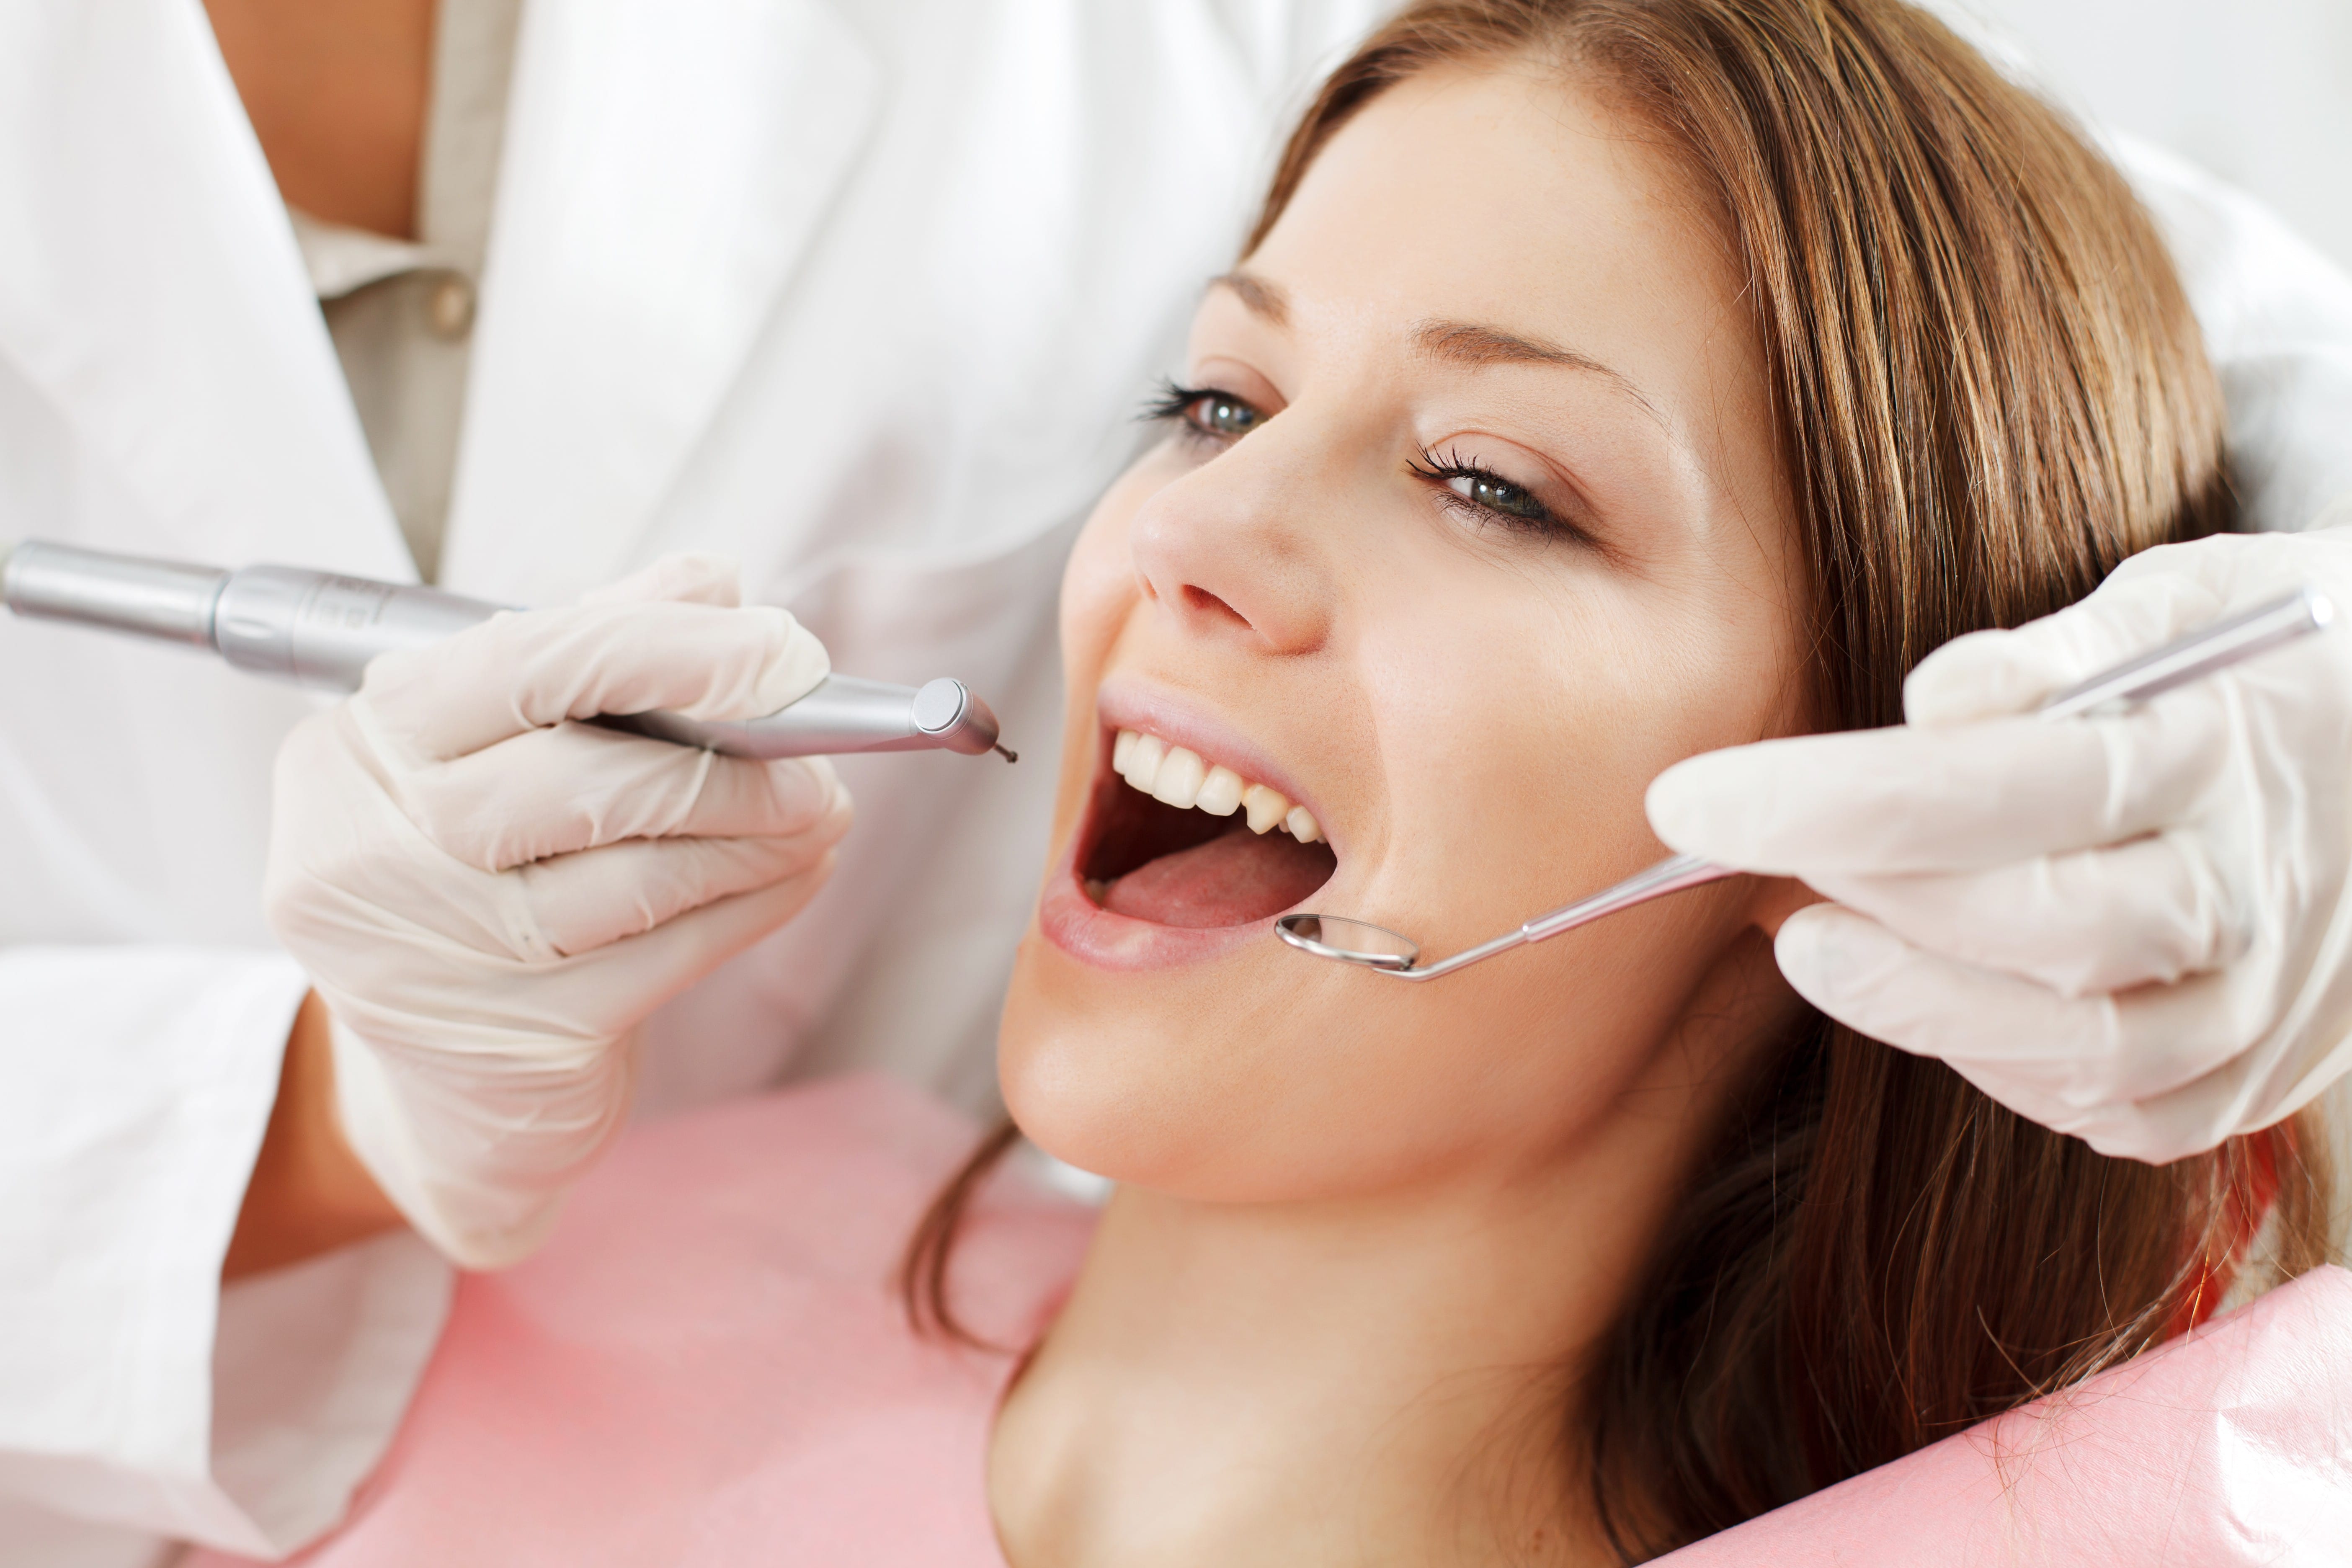 Endodontics & Root Canals
Uppleger Dental